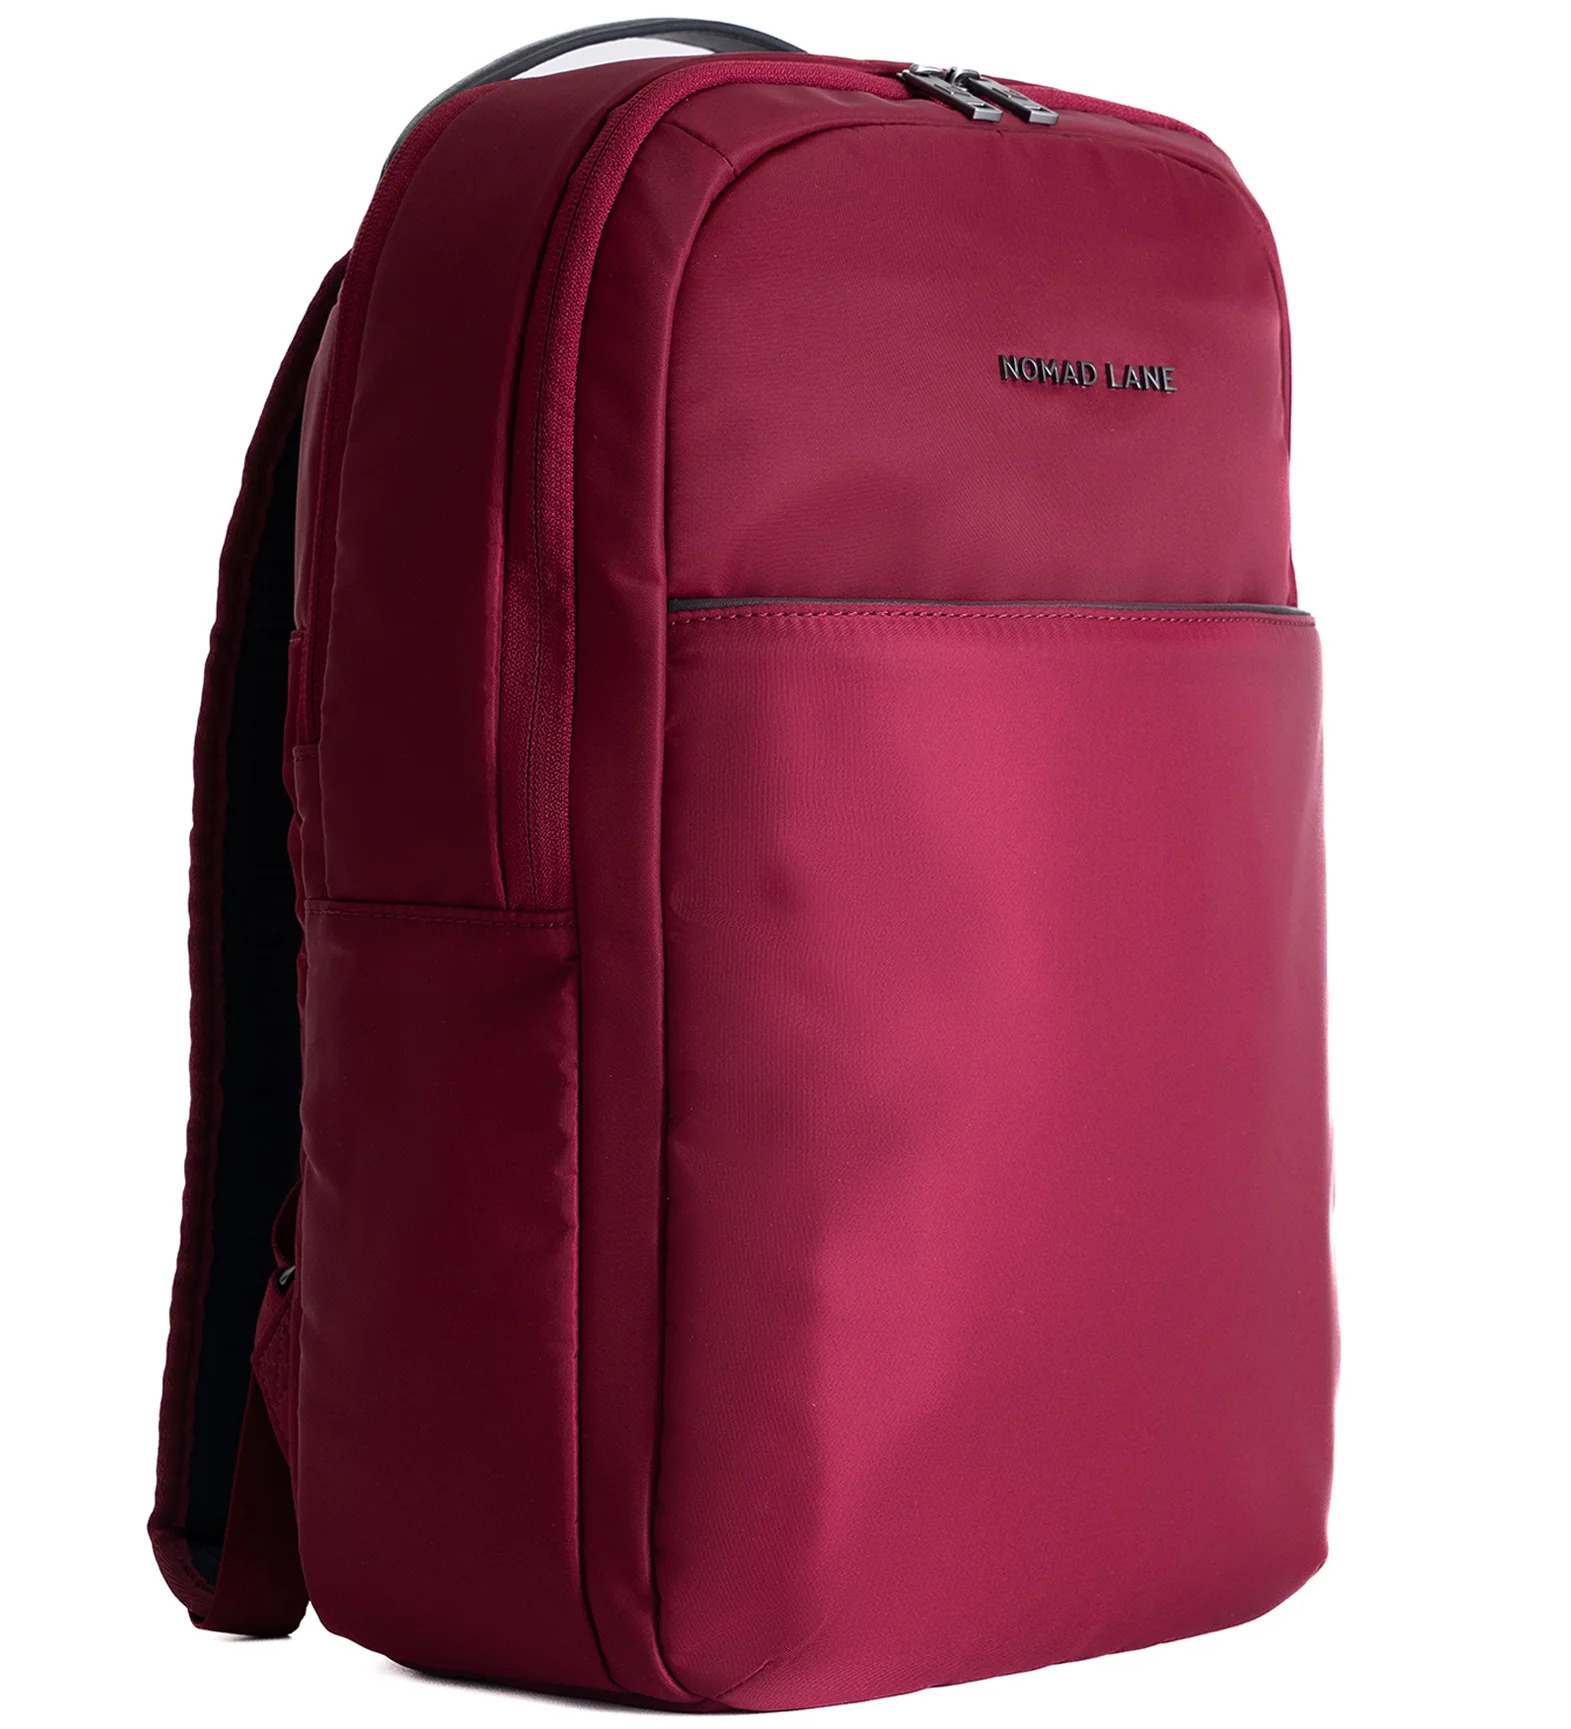 cute-backpacks-for-travel